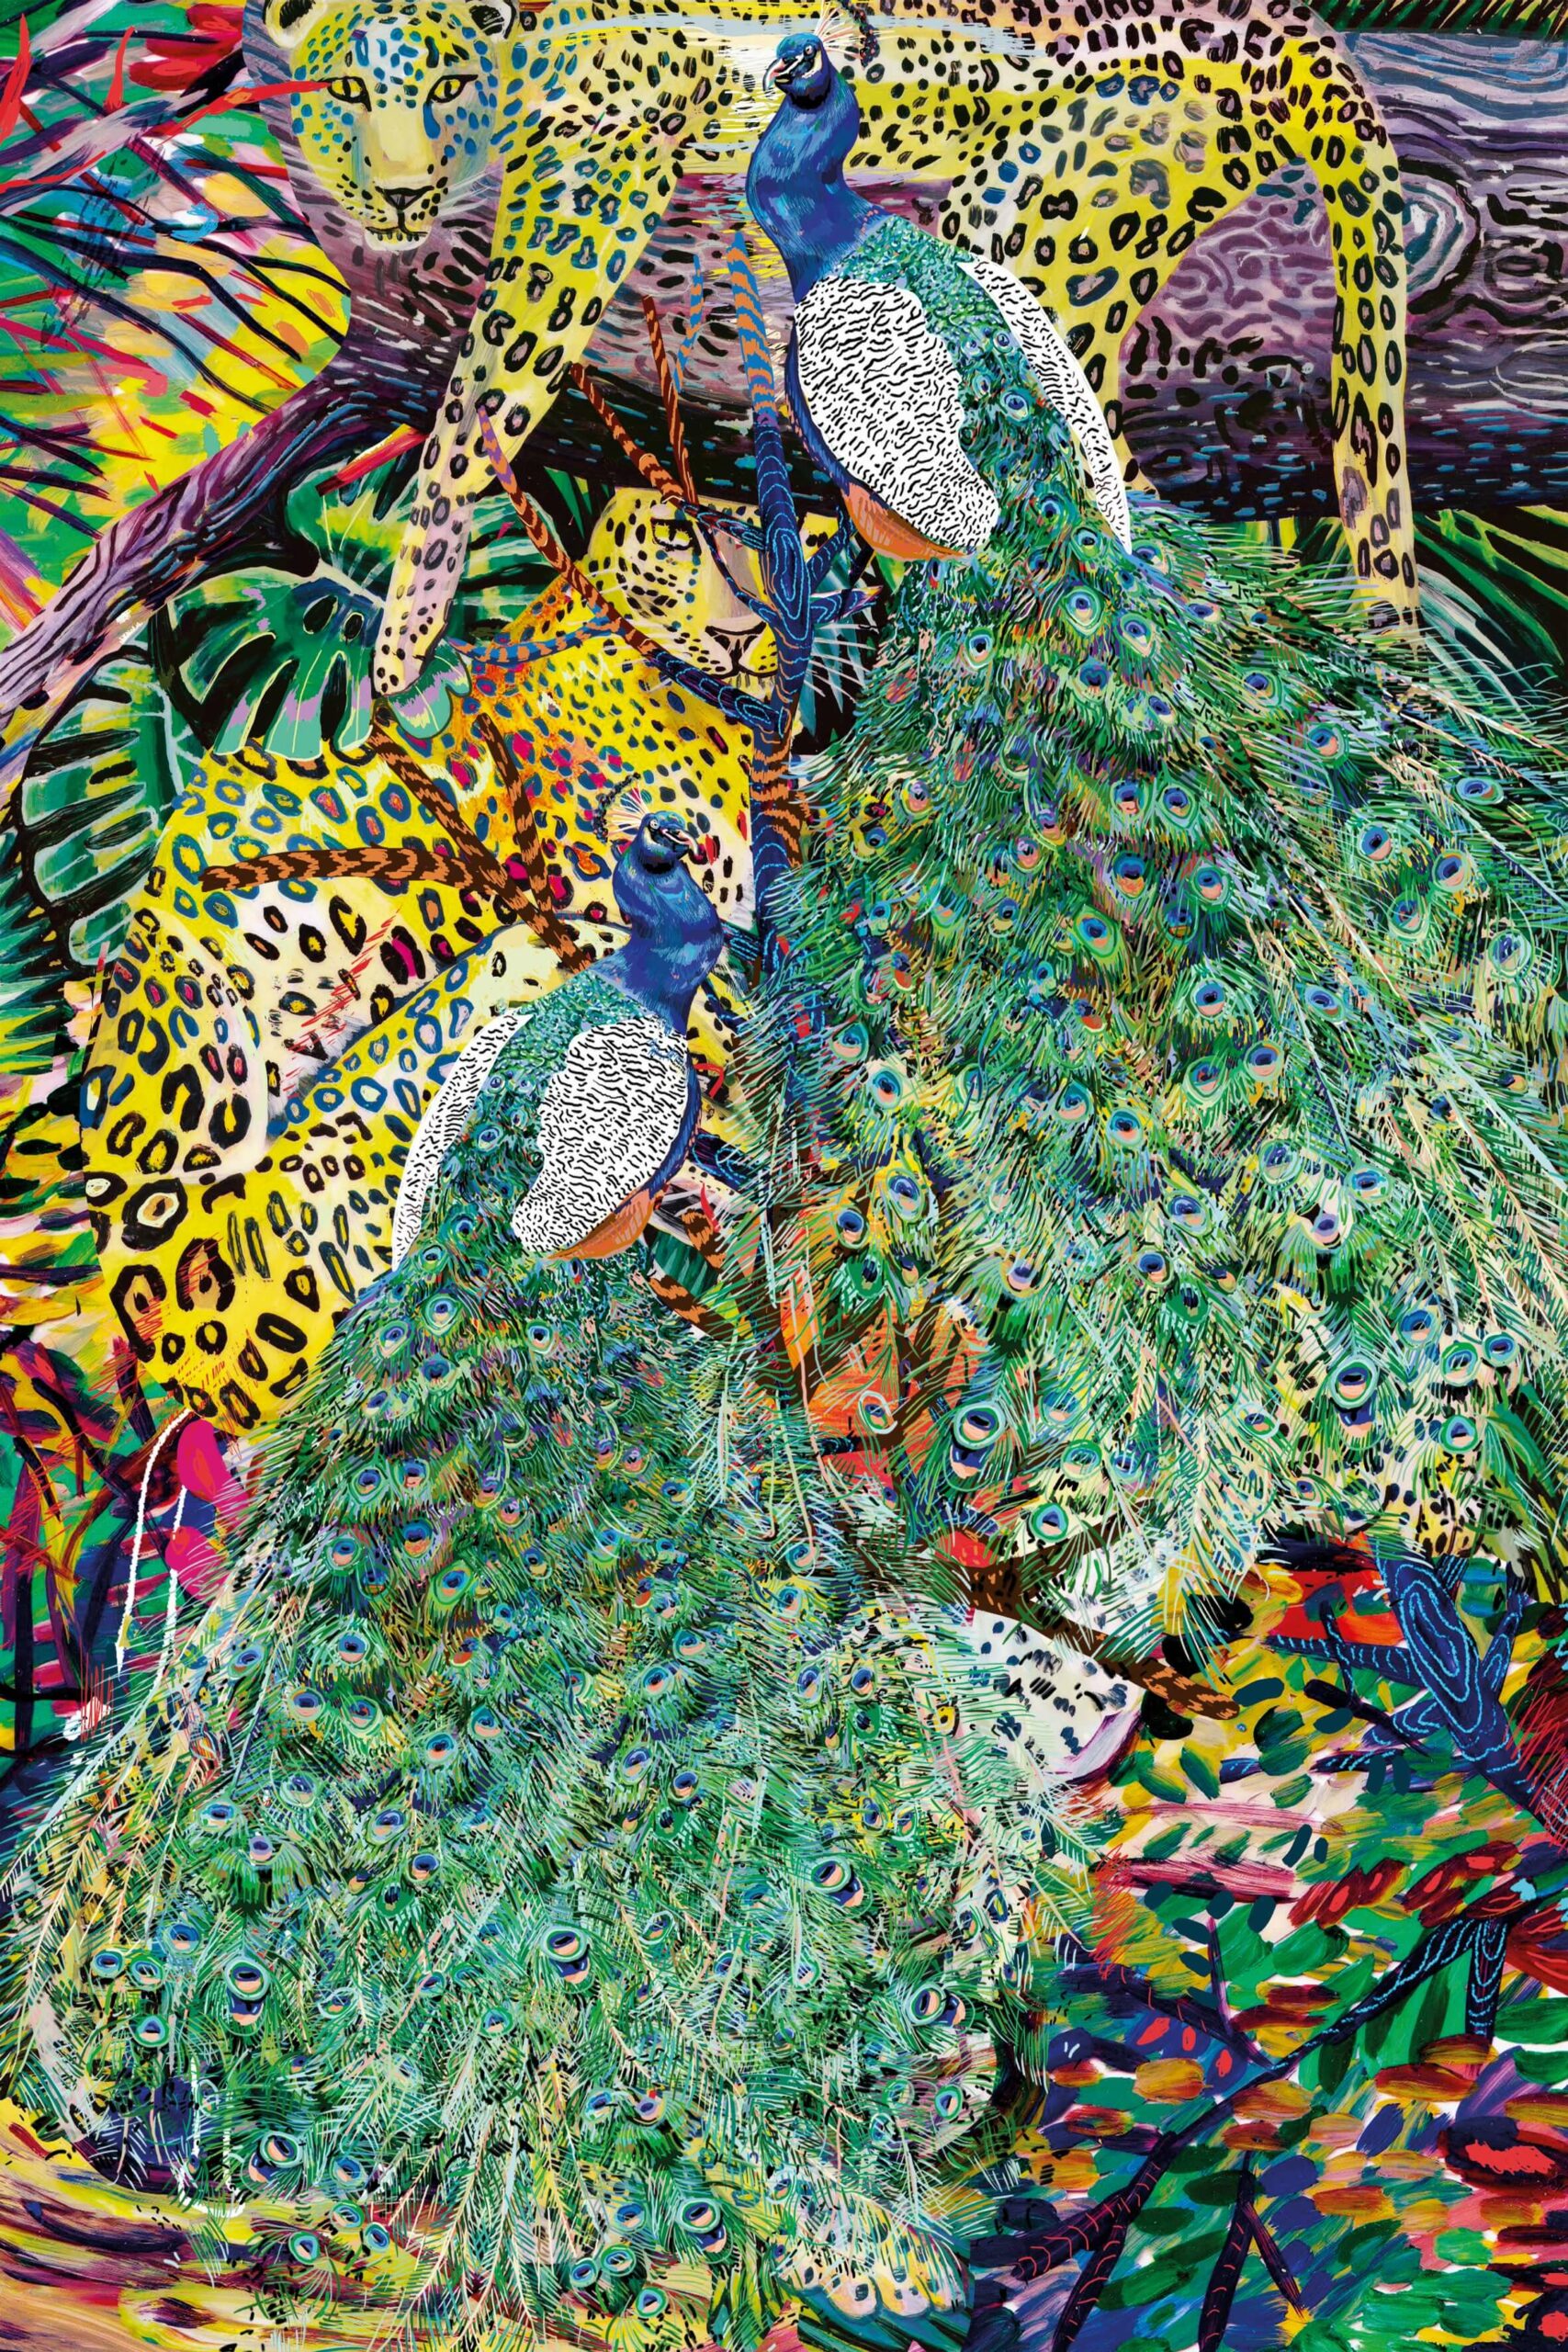 Marina Friedrich: Peacock and Leopard, 2021, 40 x 30 cm